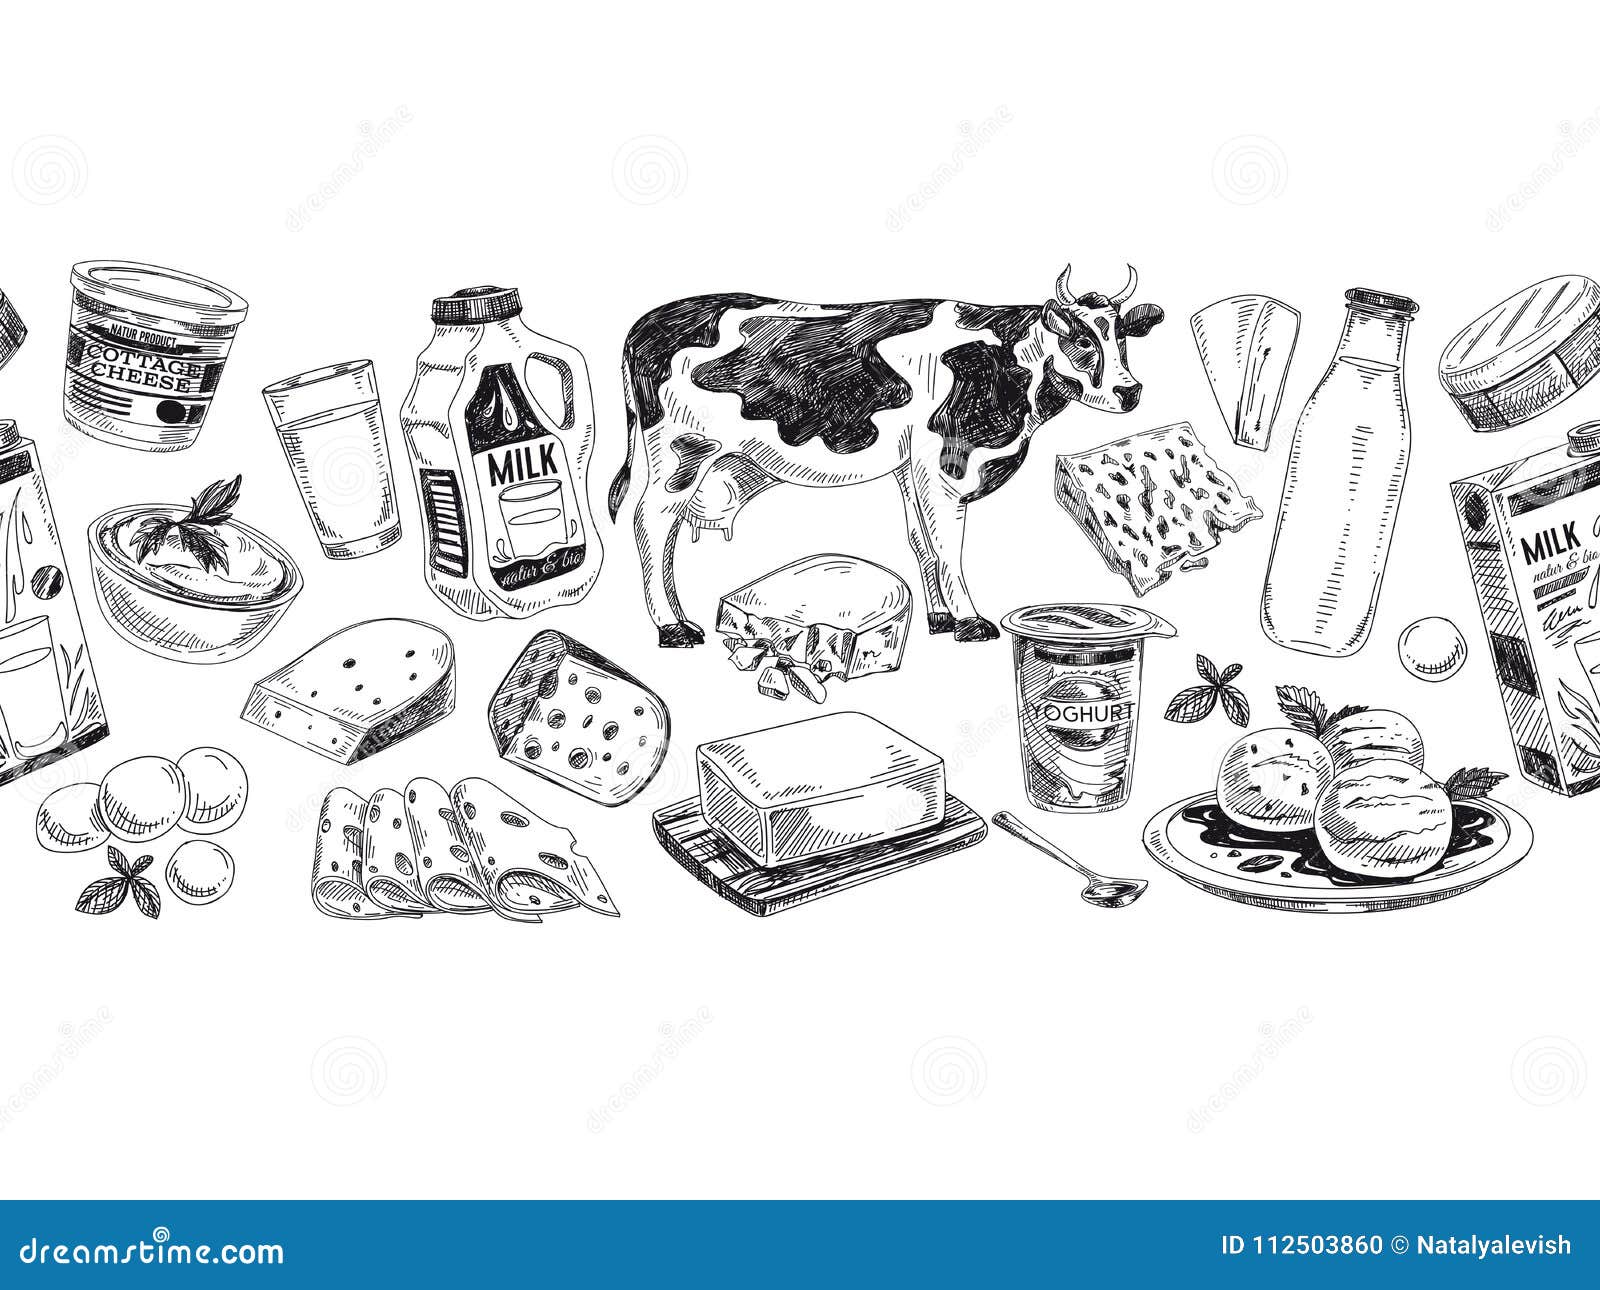 Bottle Milk Sketch Set: Over 3,822 Royalty-Free Licensable Stock Vectors &  Vector Art | Shutterstock